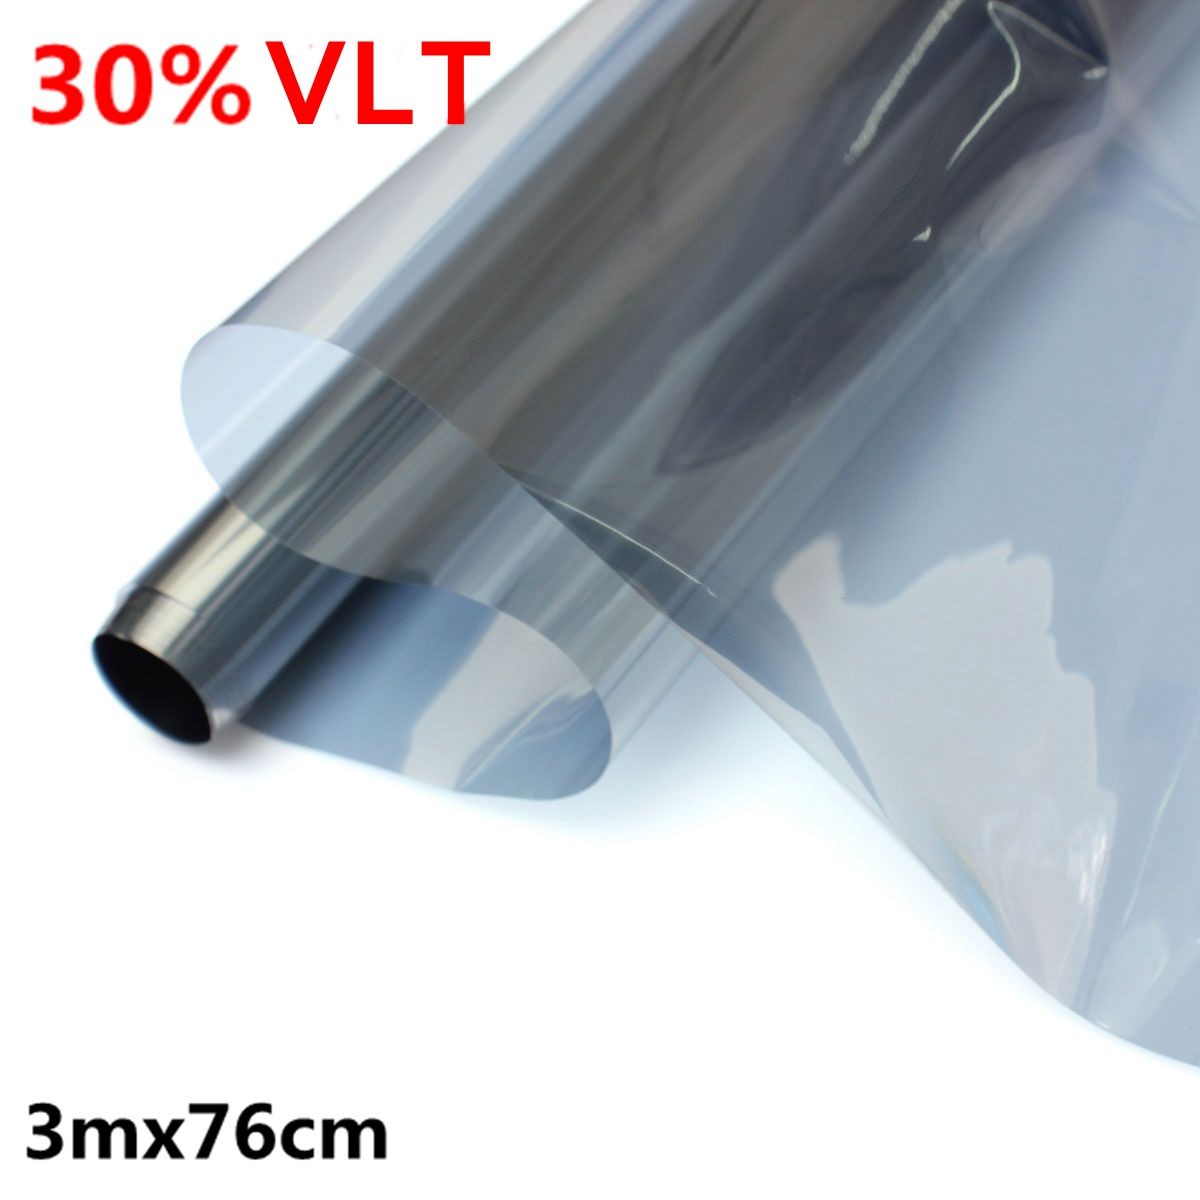 15-30-3mx76cm-LVT-Car-Auto-Window-Glass-Tint-Film-Tinting-Roll-Silver-Mirror-1020484